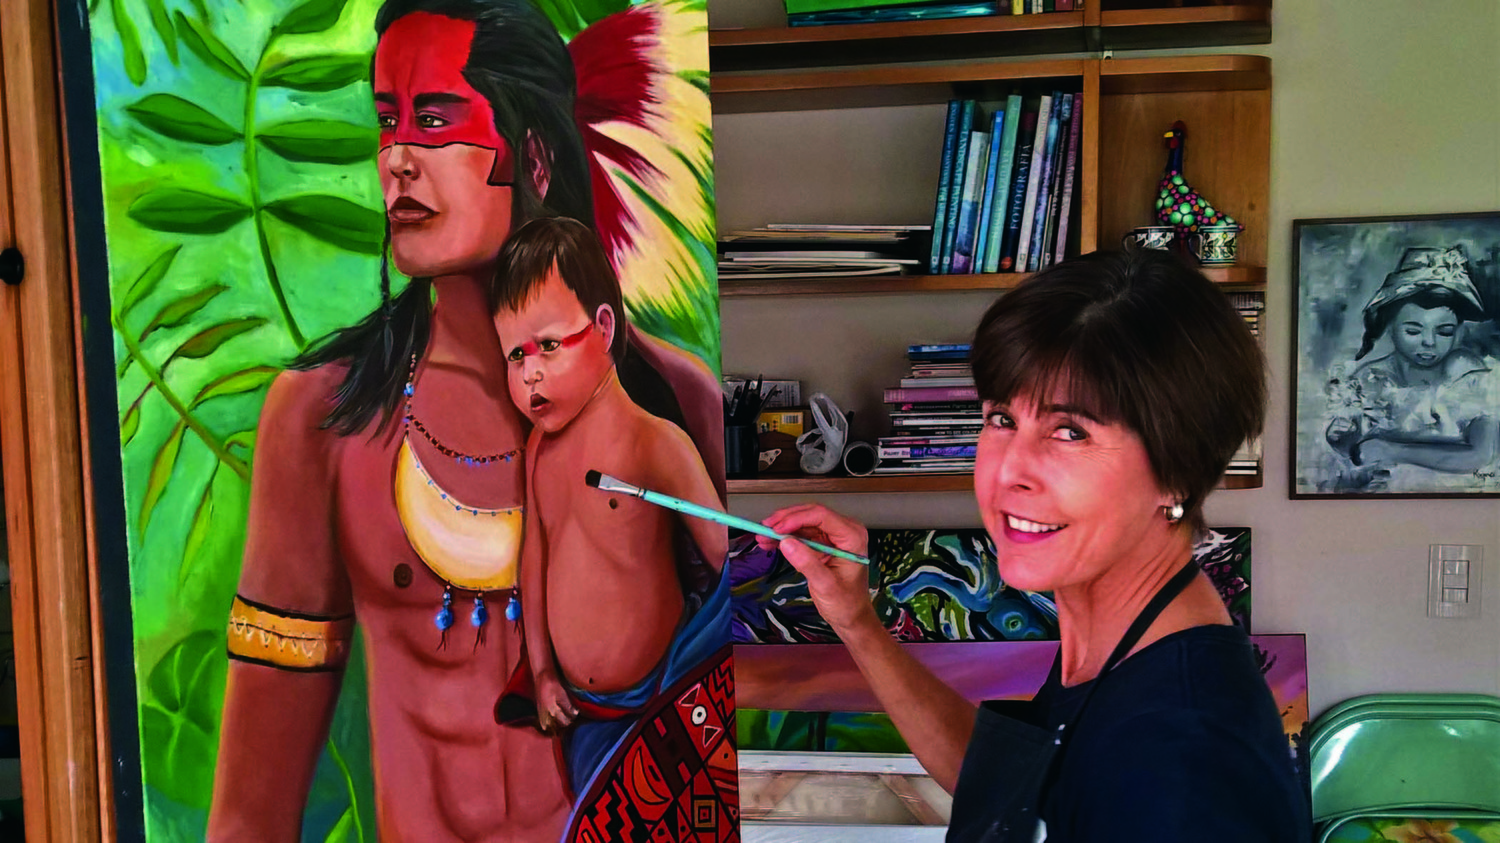 Regina Macedo: Researcher and Artist of the Amazon